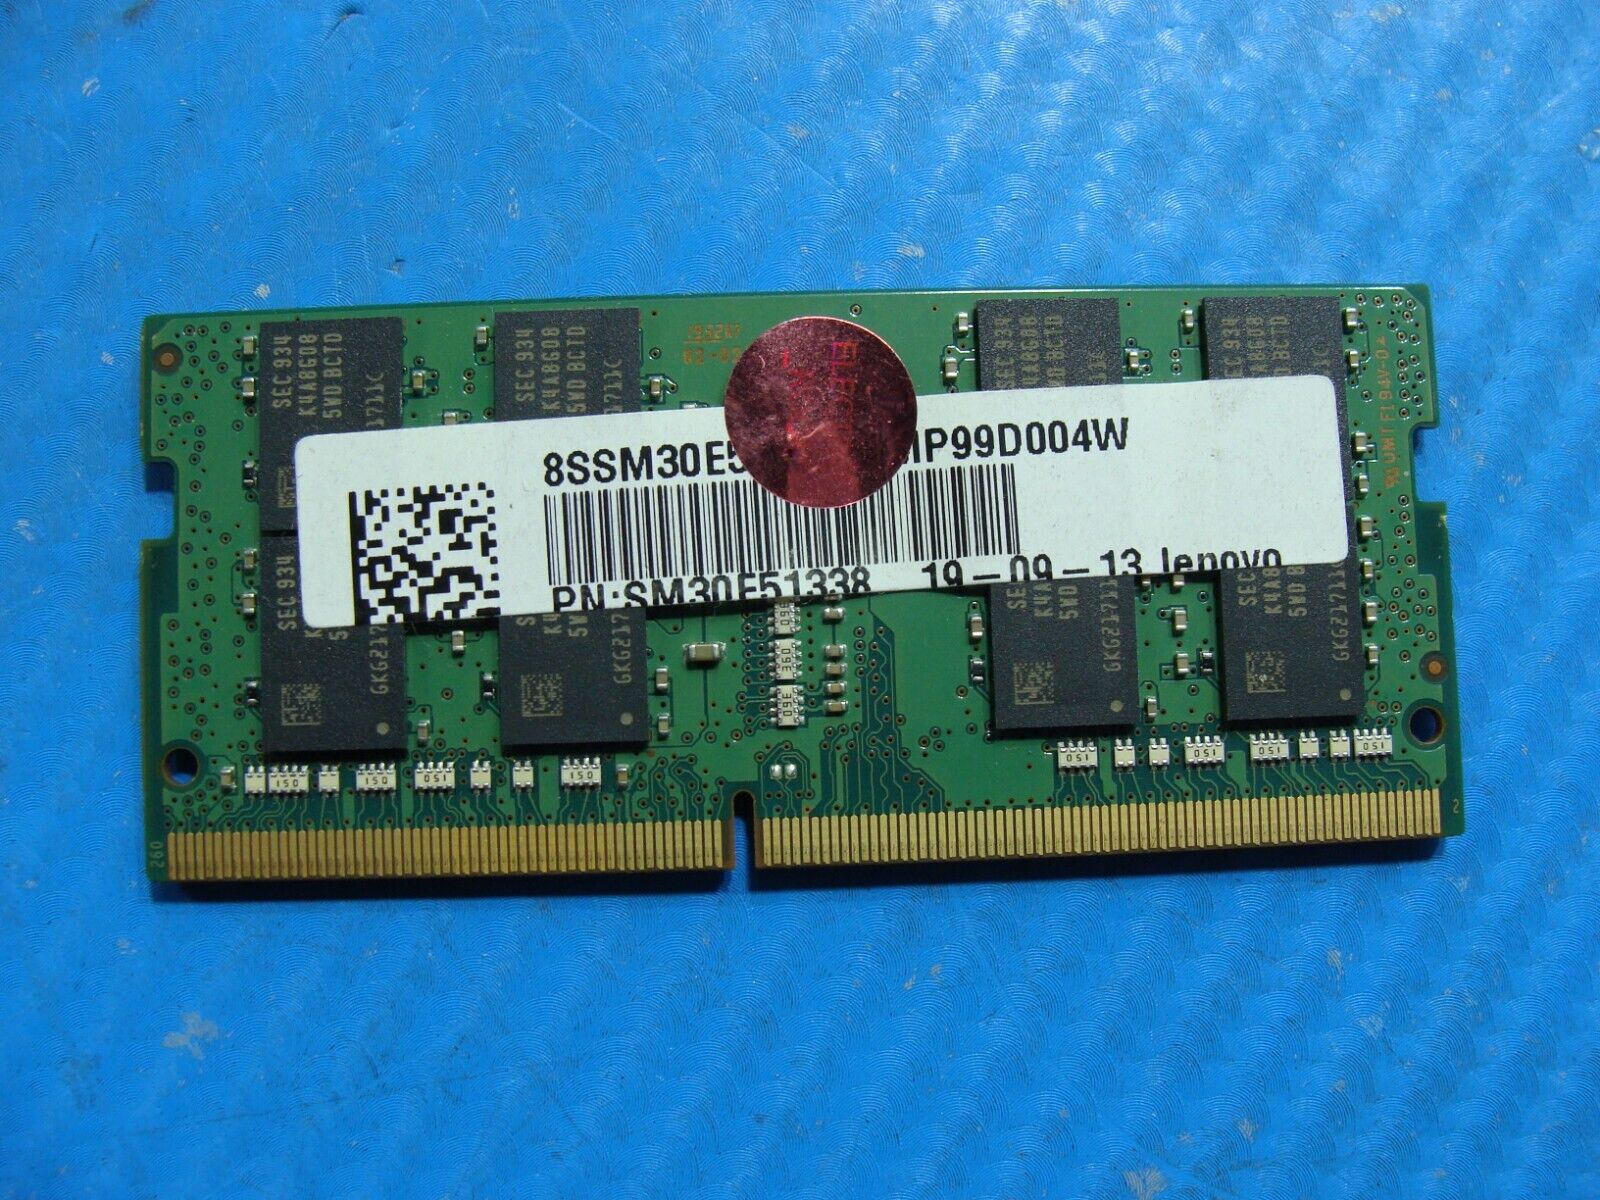 Lenovo Flex-14IWL Samsung 16GB PC4-2666V Memory RAM SO-DIMM M471A2K43DB1-CTD